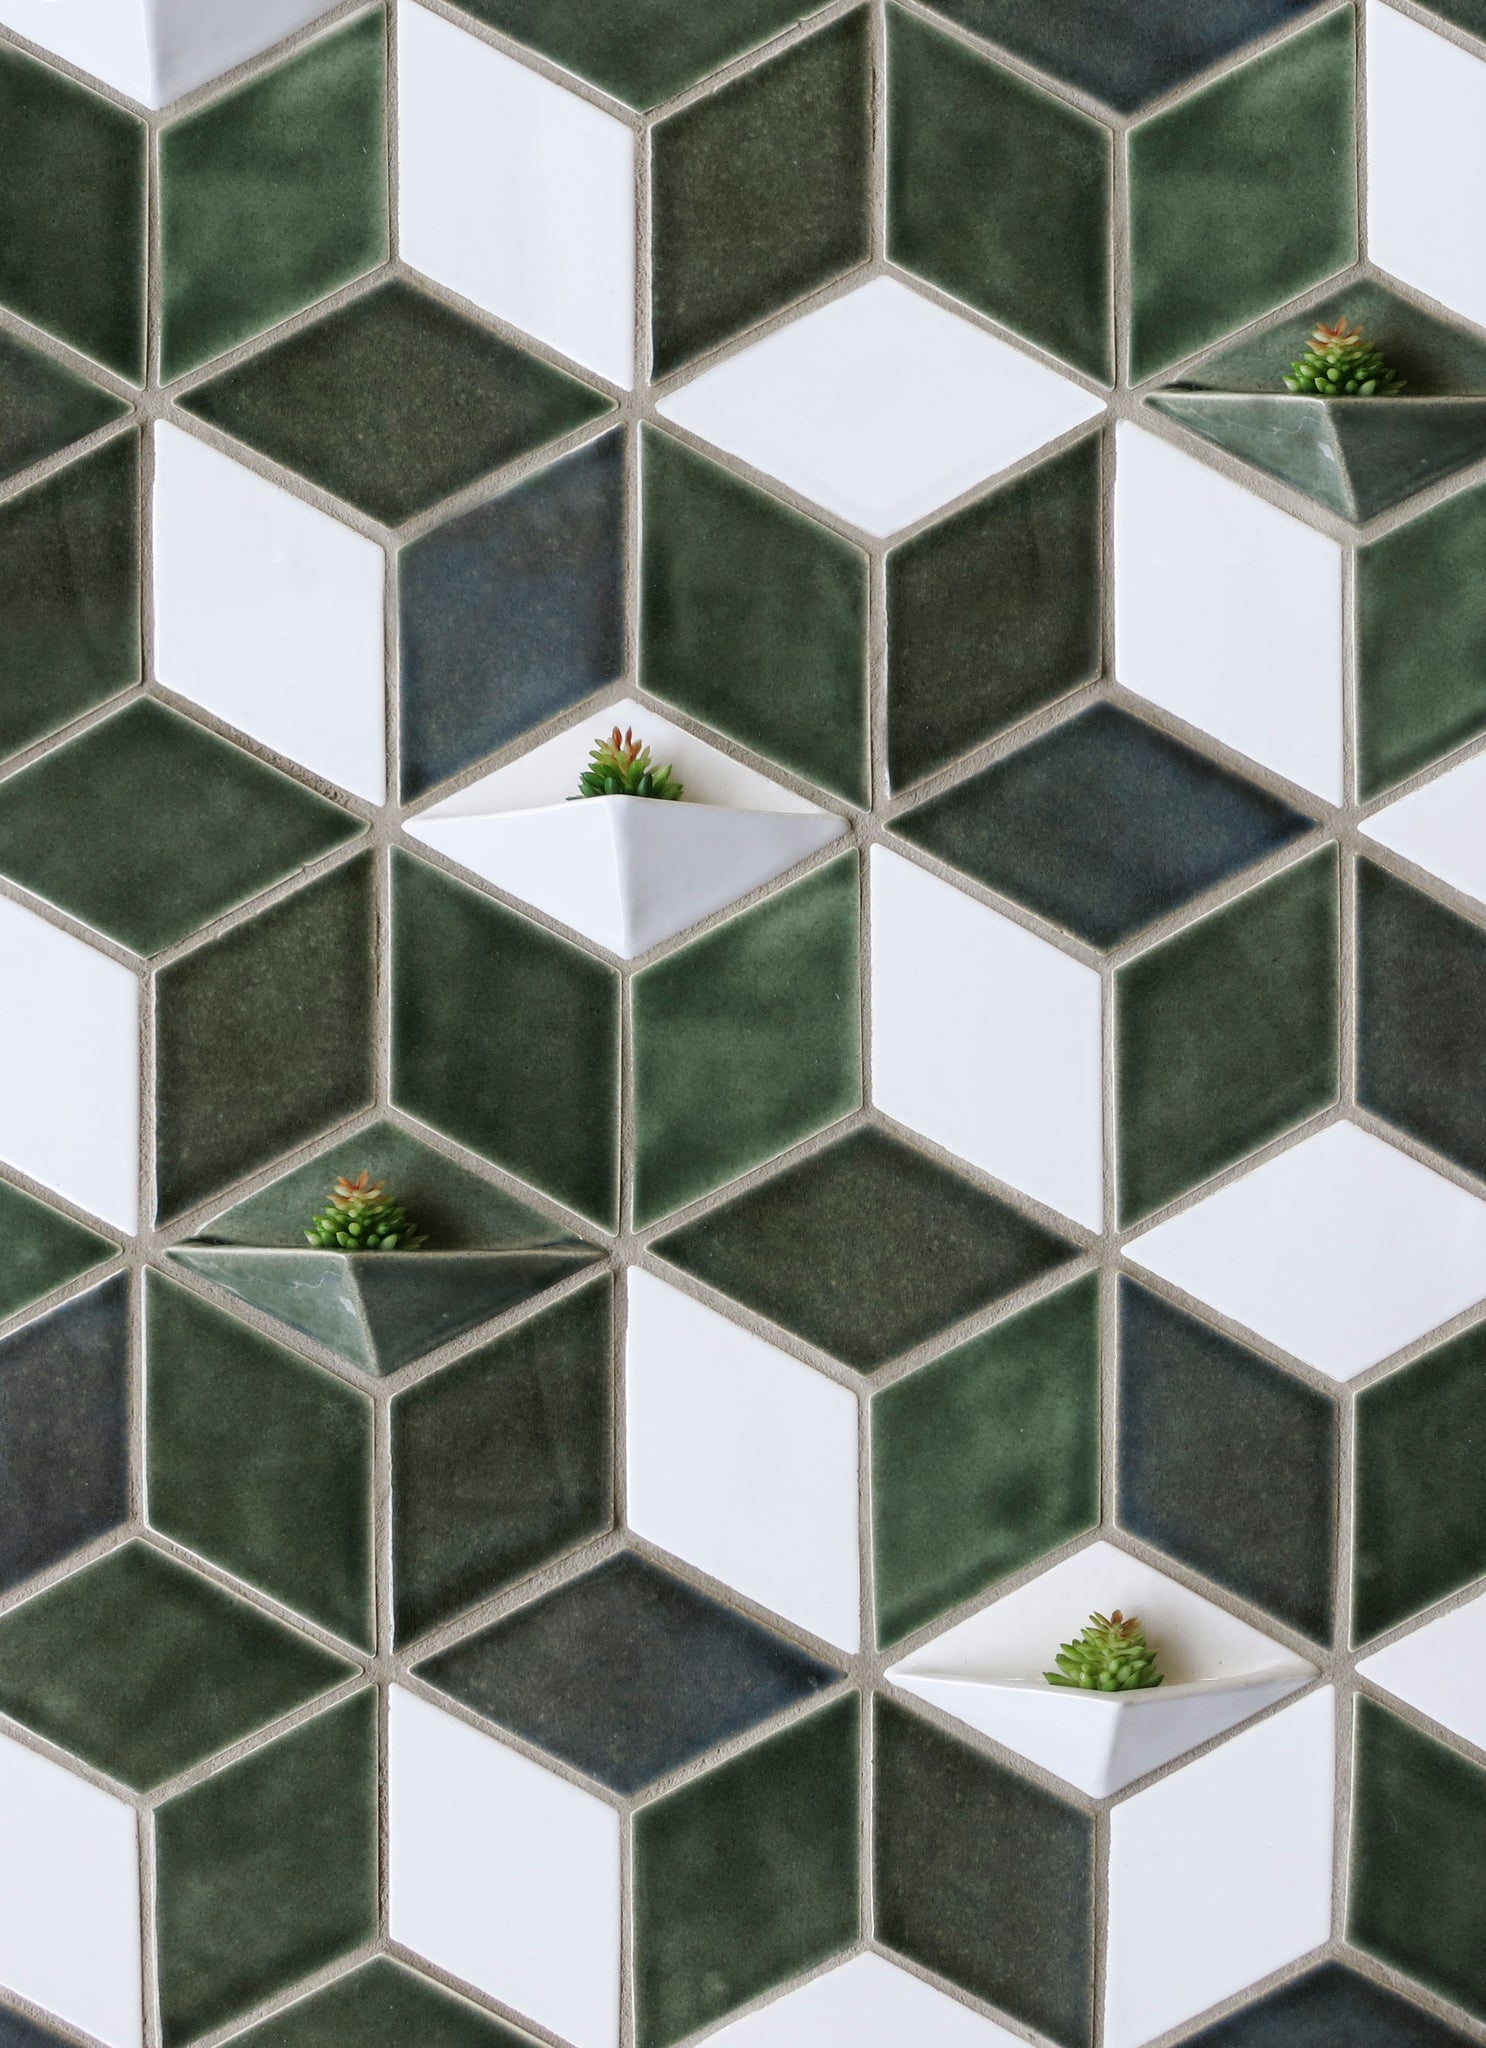 Diamond Tiles with Plant Holders